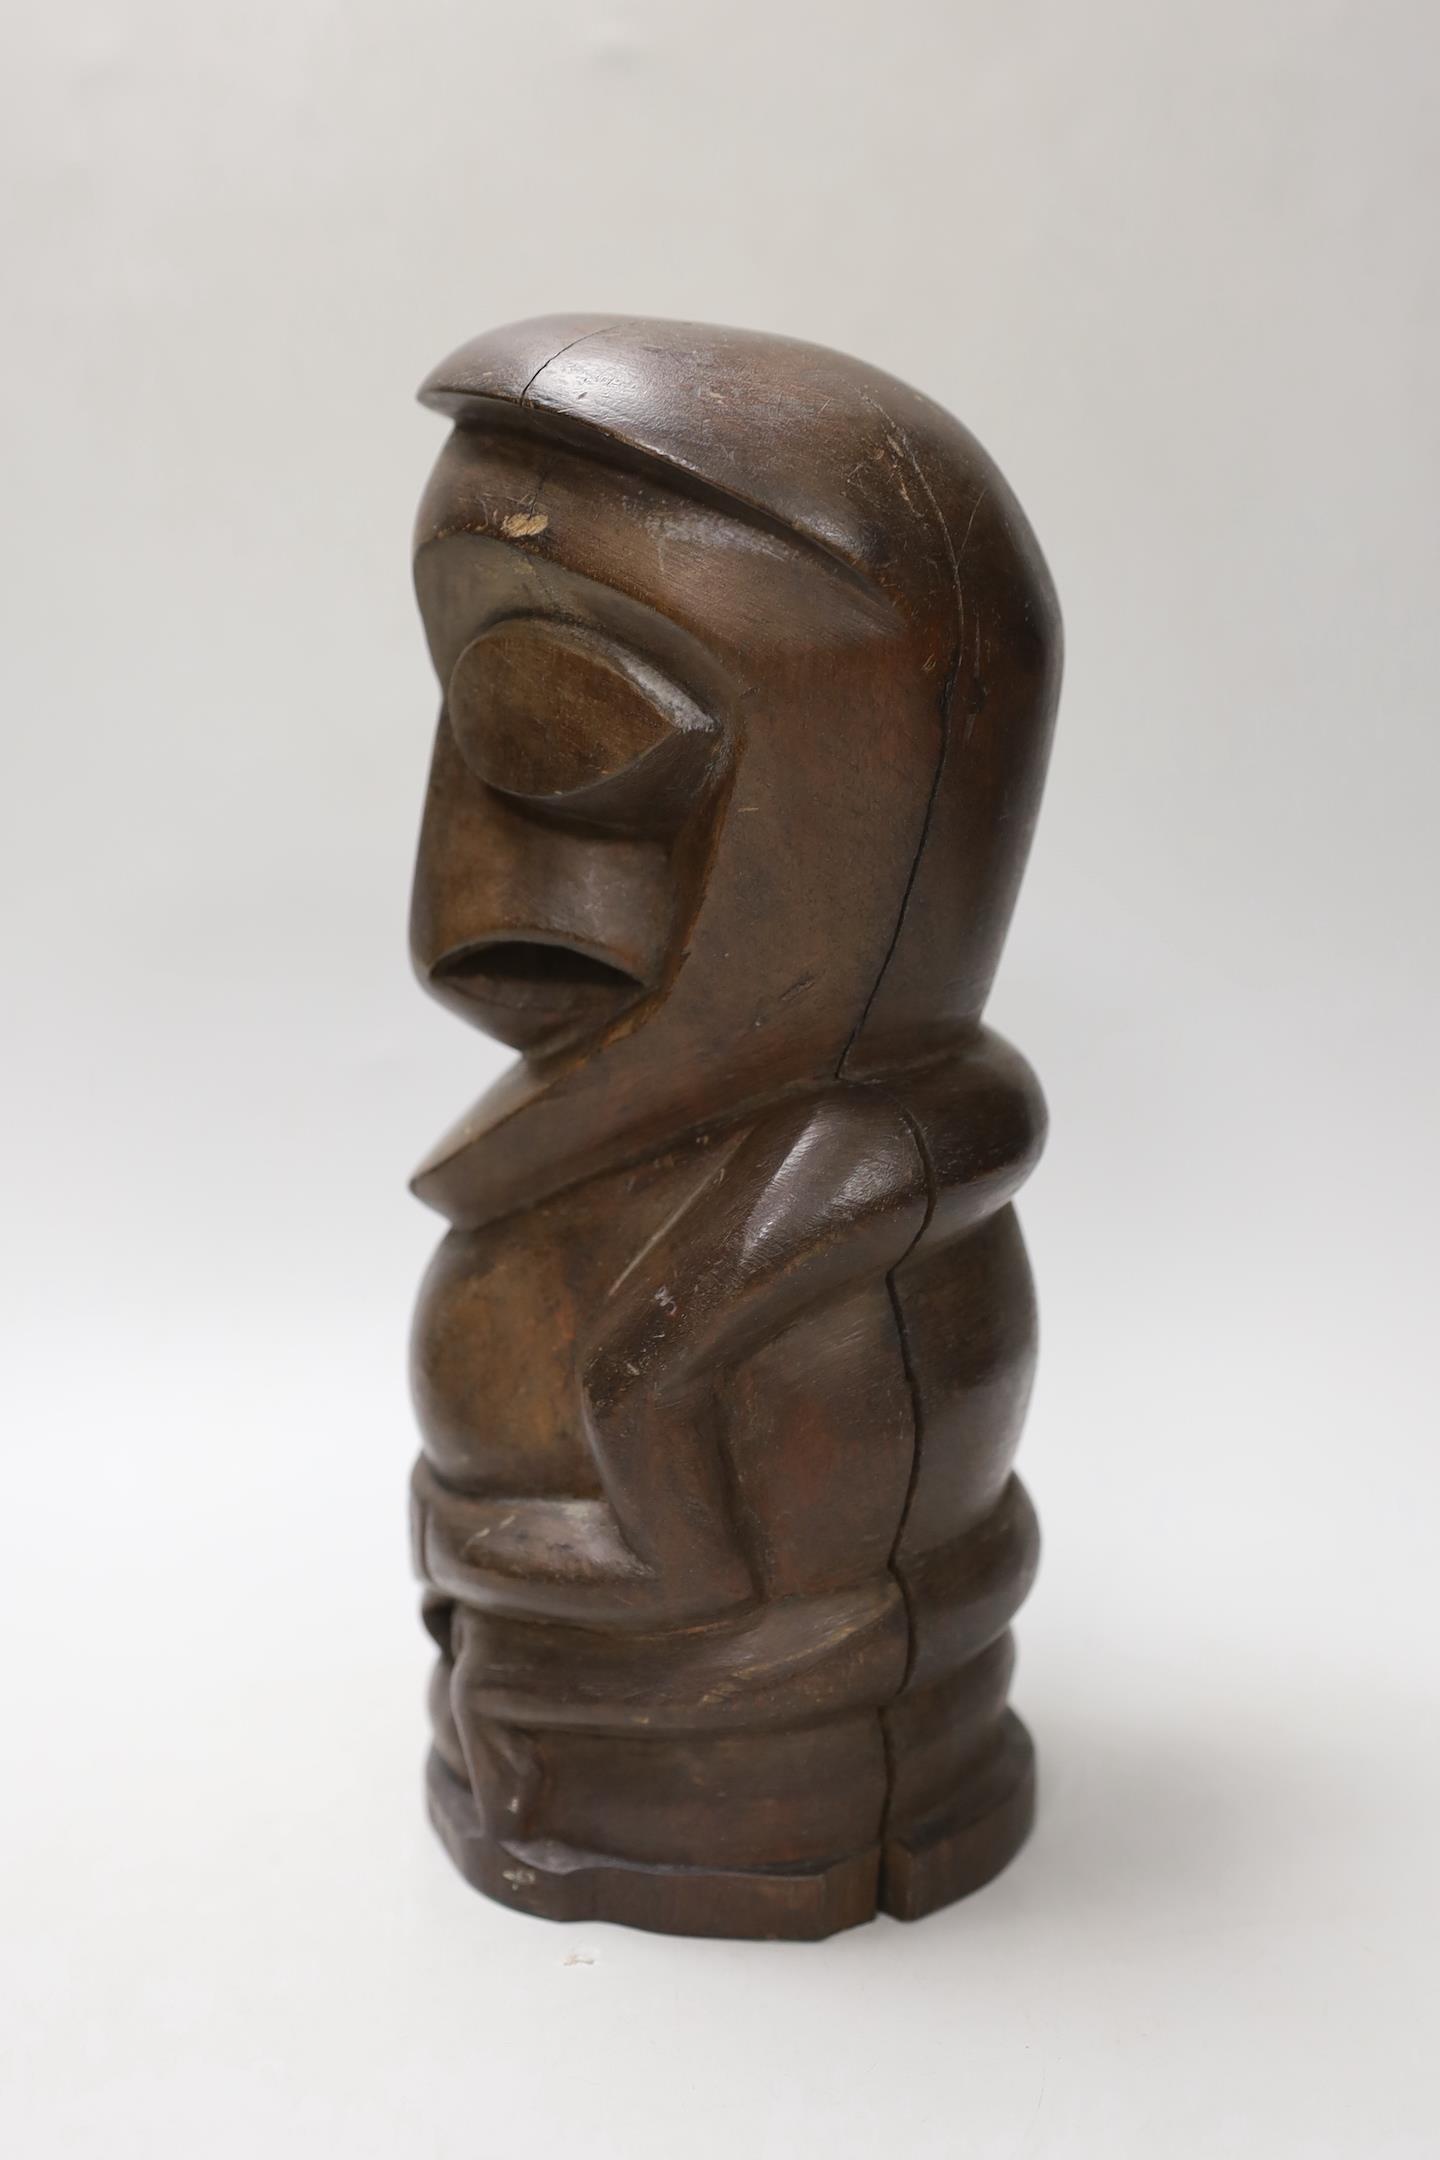 A Maori-type carved hardwood totem figure, 26cm high - Image 2 of 2